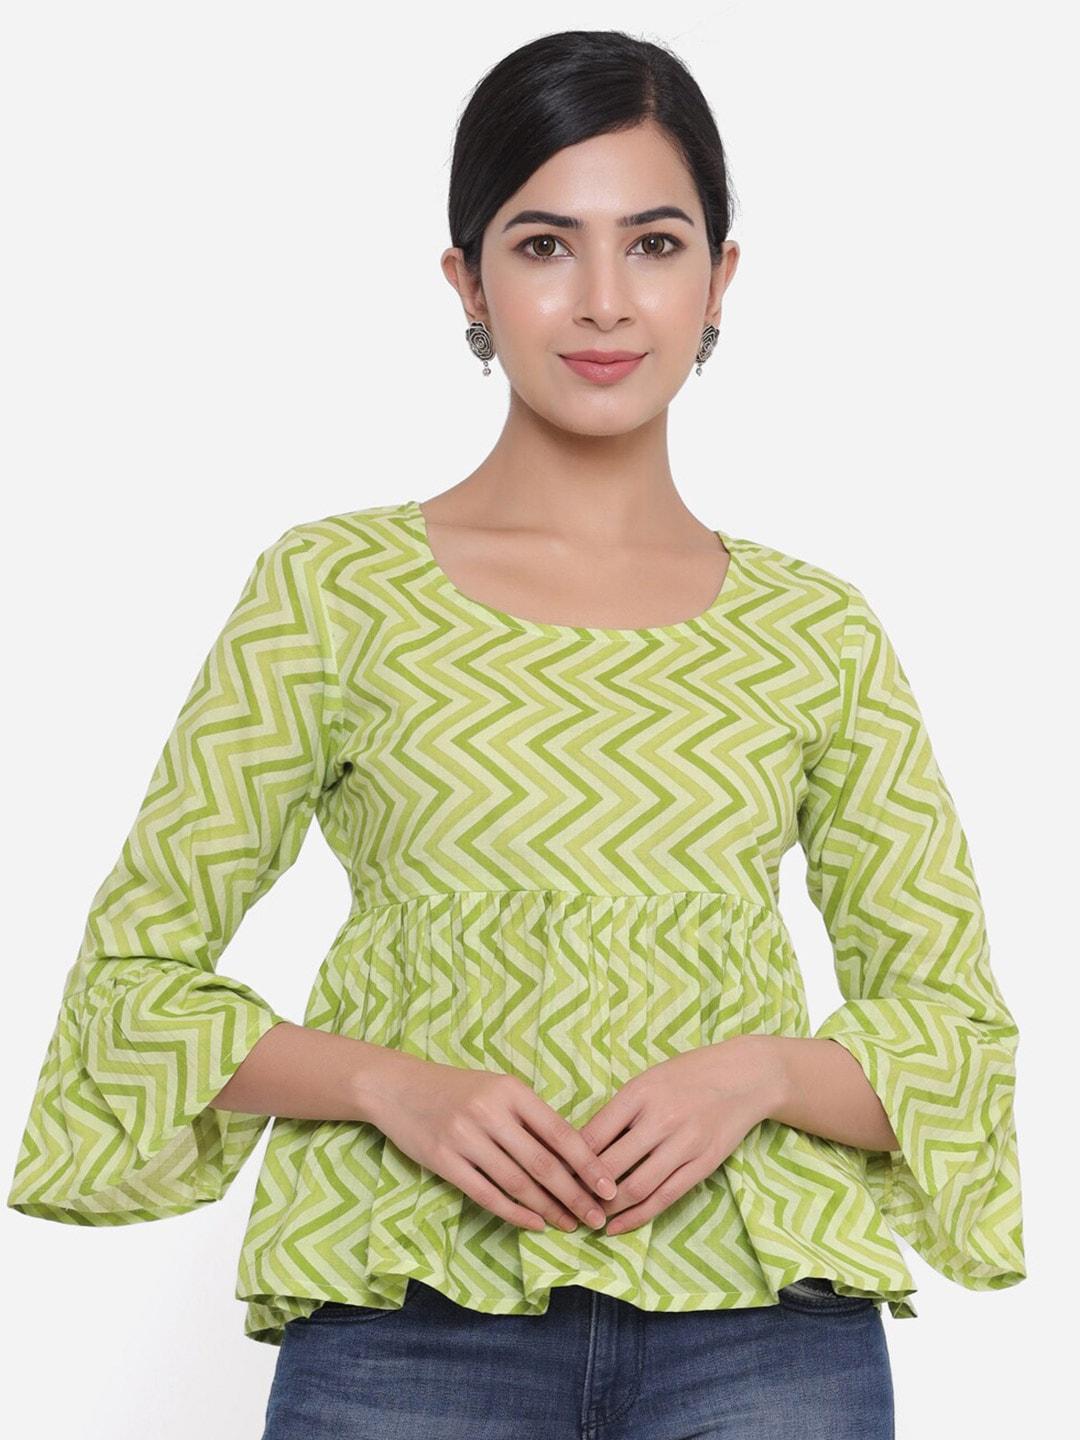 christeena women green geometric print ruffles pure cotton peplum top